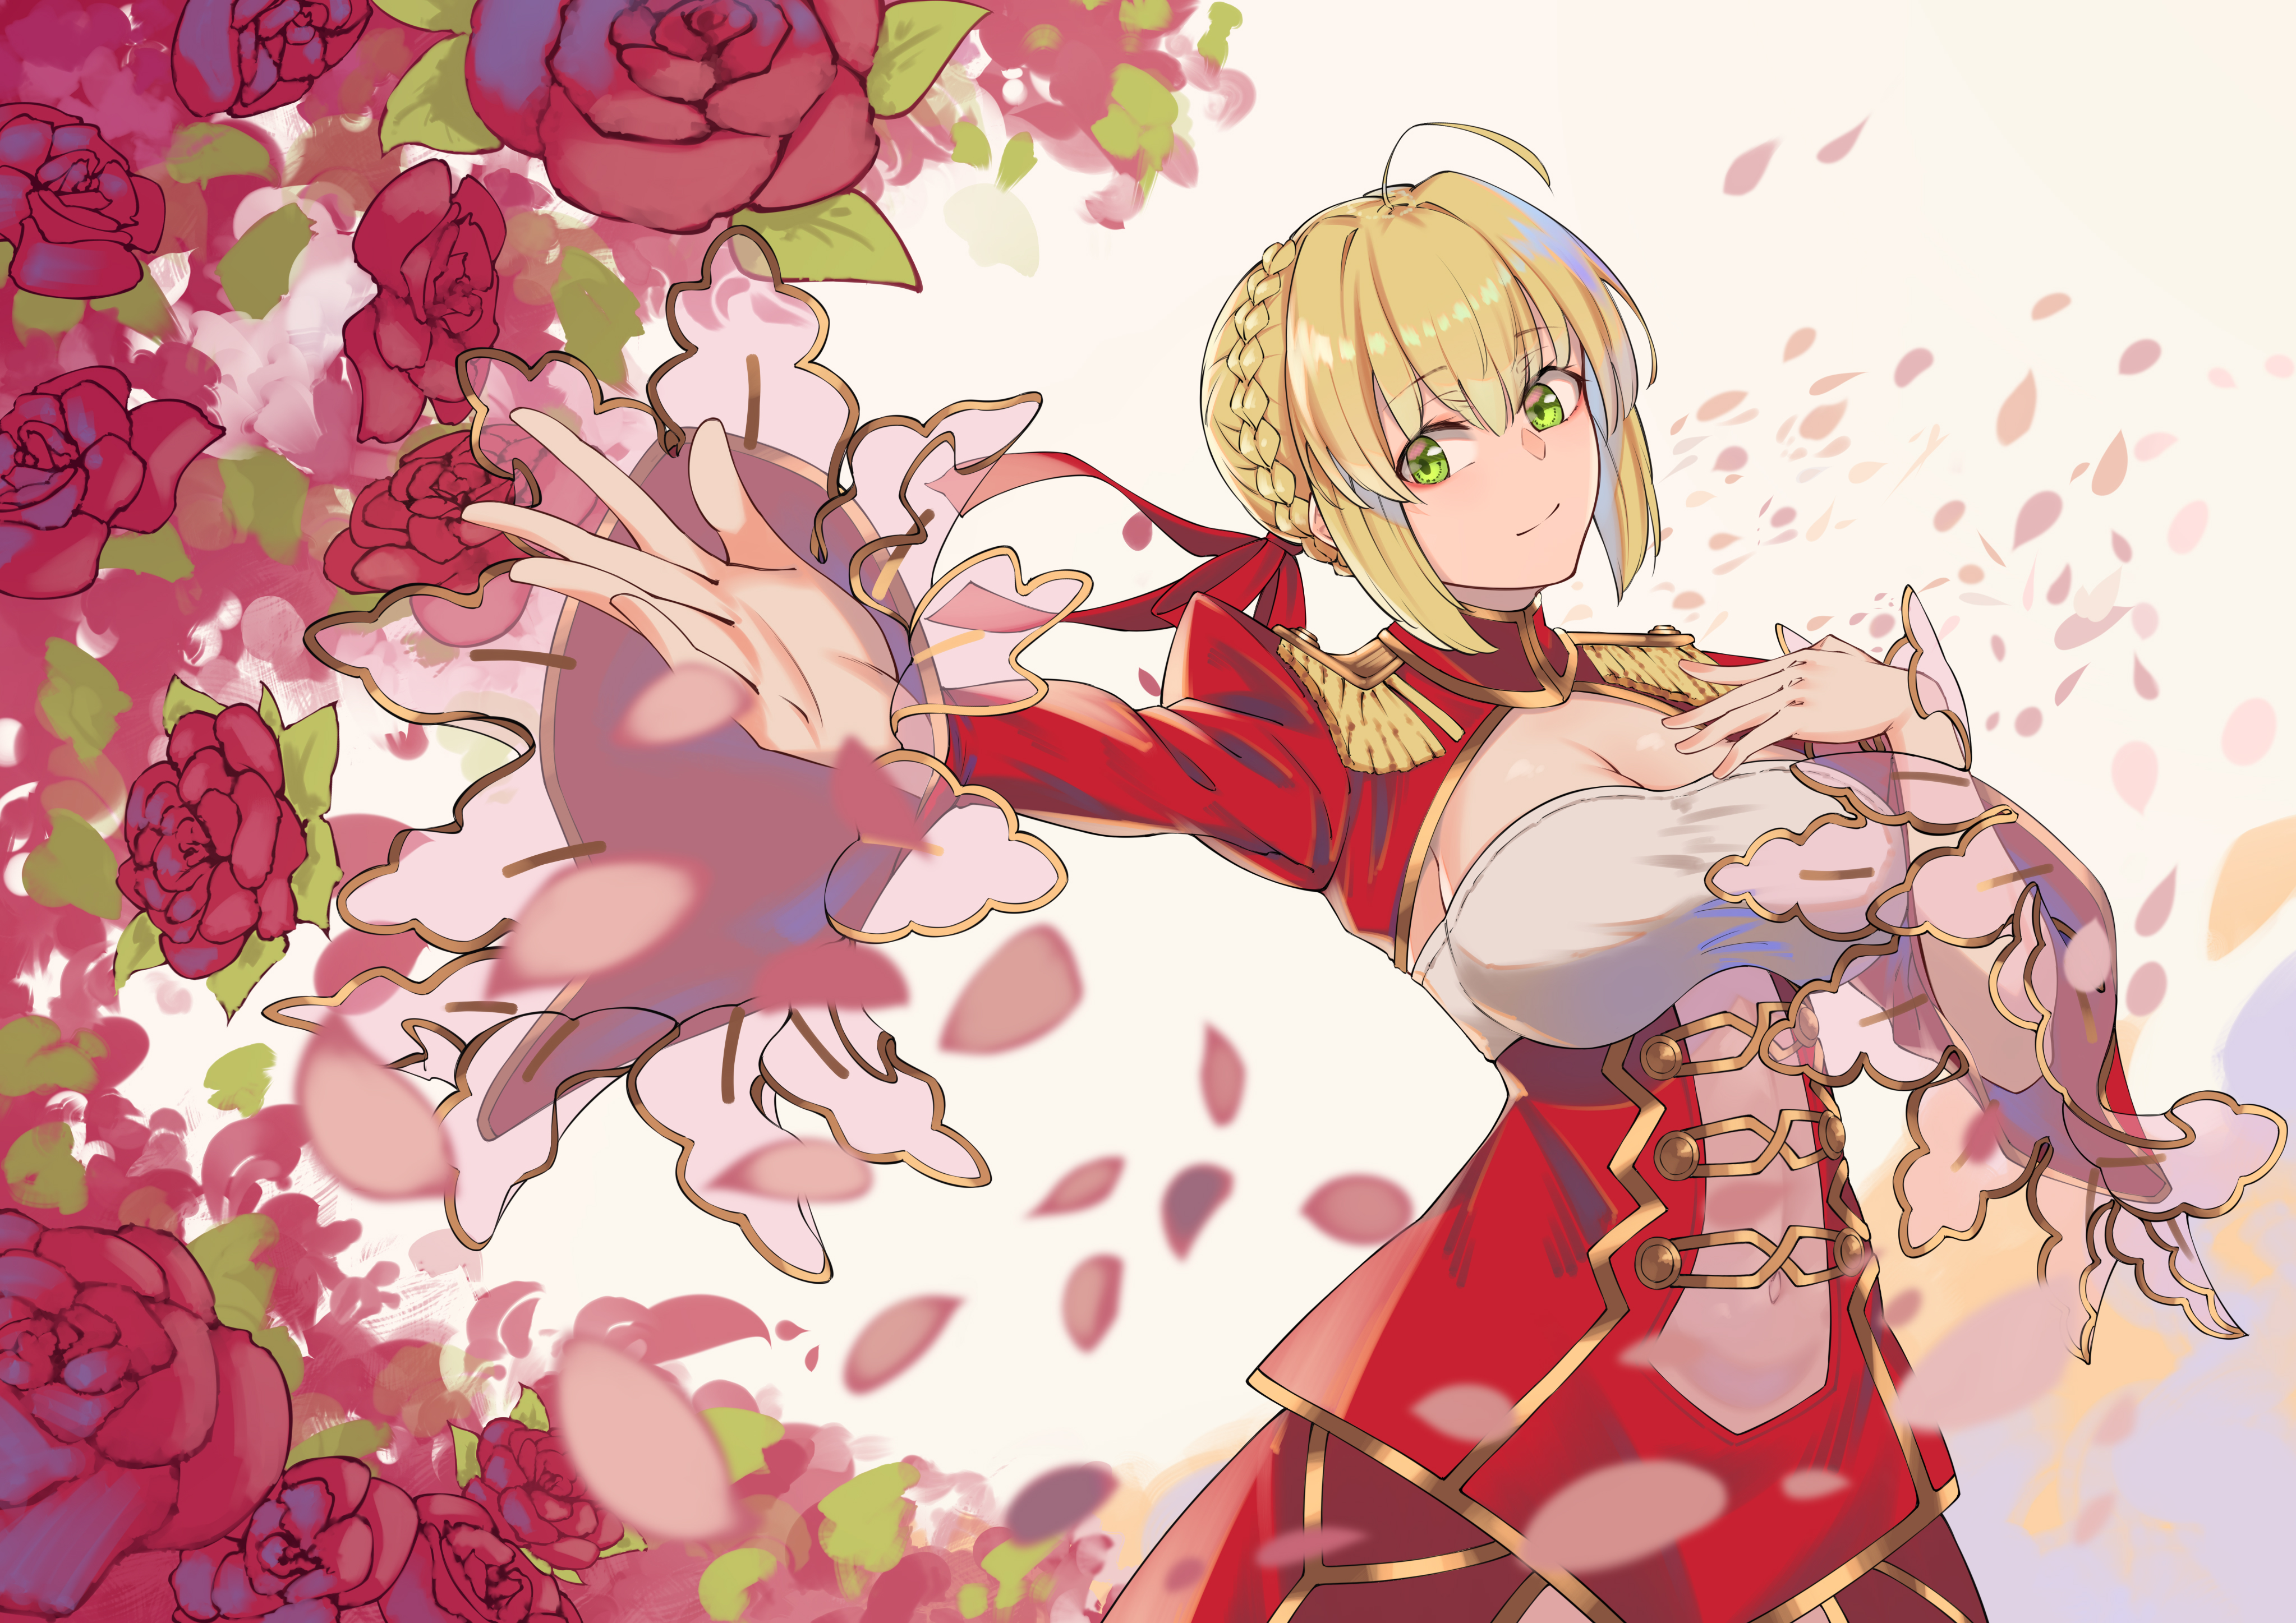 Anime 4093x2894 artwork digital art blonde Fate series Fate/Extra Fate/Grand Order Nero Claudius dress anime girls